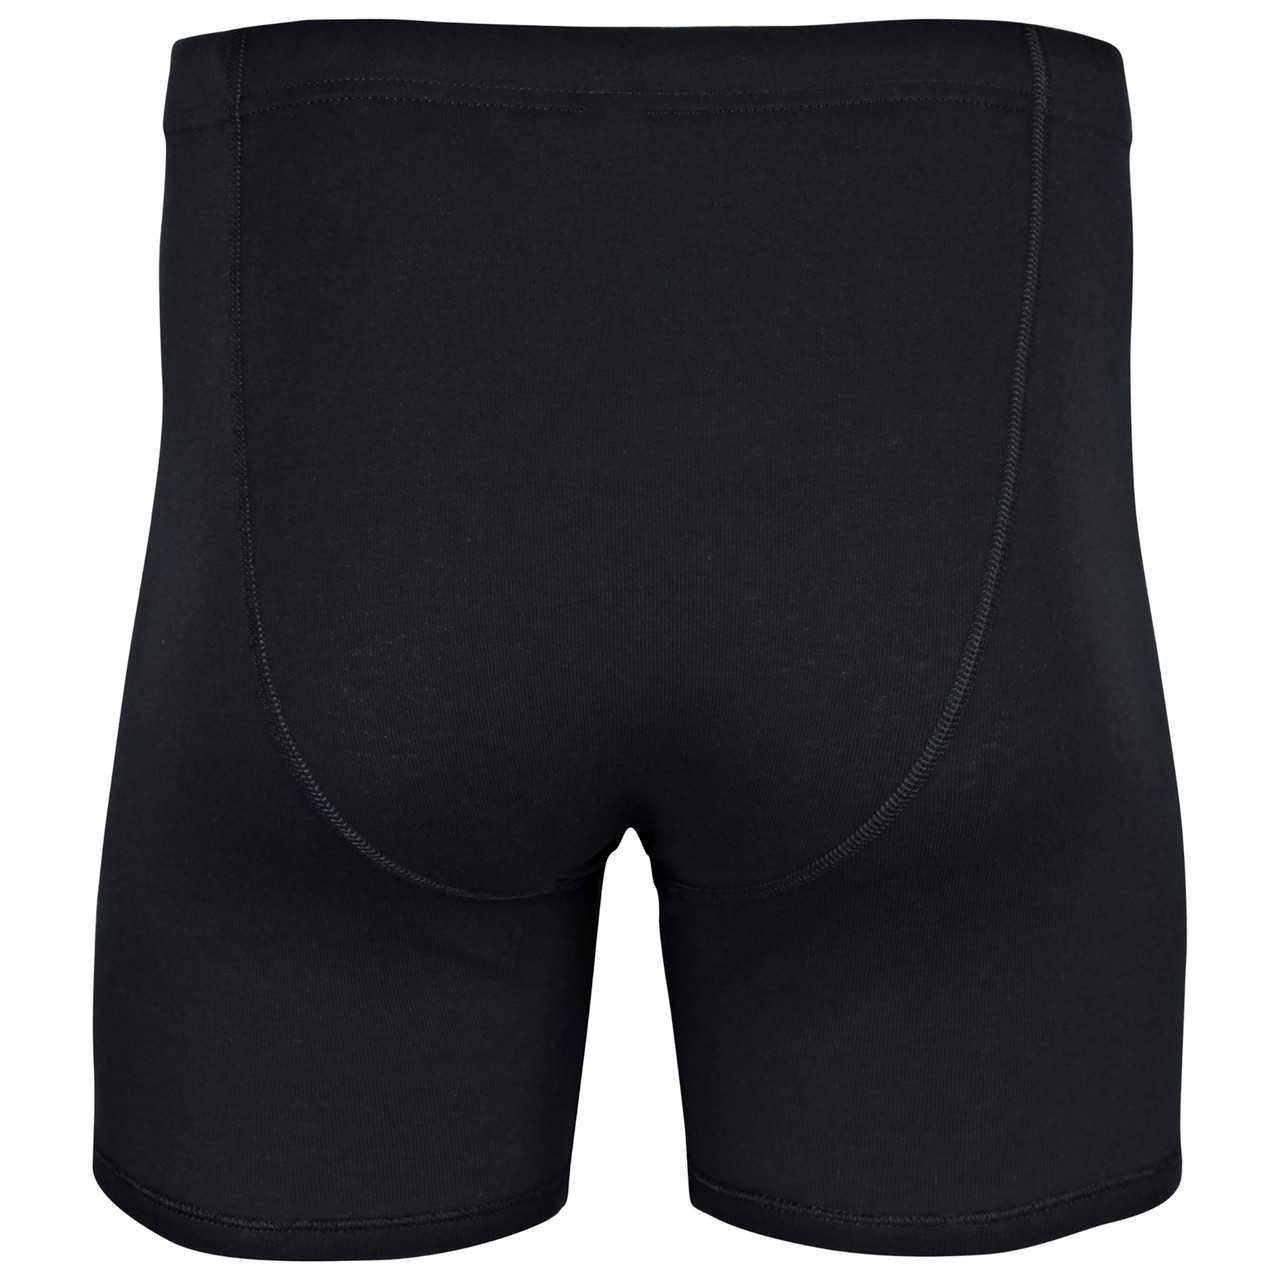 Gildan Men's Underwear Briefs, Multipack